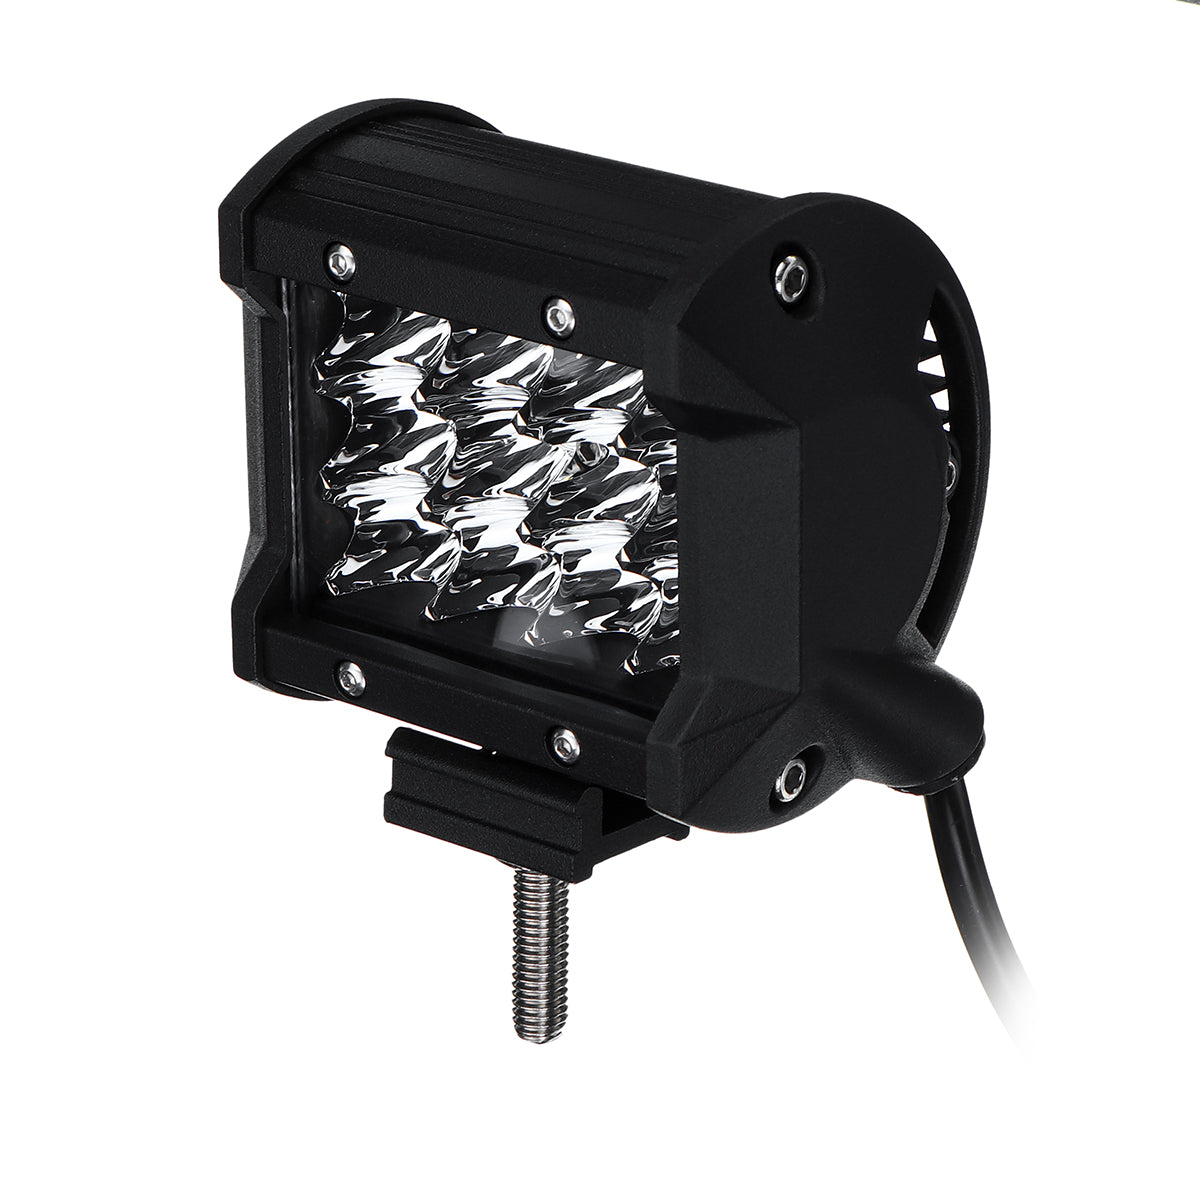 Black 3.5Inch 36W LED Work Light Bar Strobe Flash Lamp White+Amber Dual Color 10-30V for Offroad Truck SUV ATV